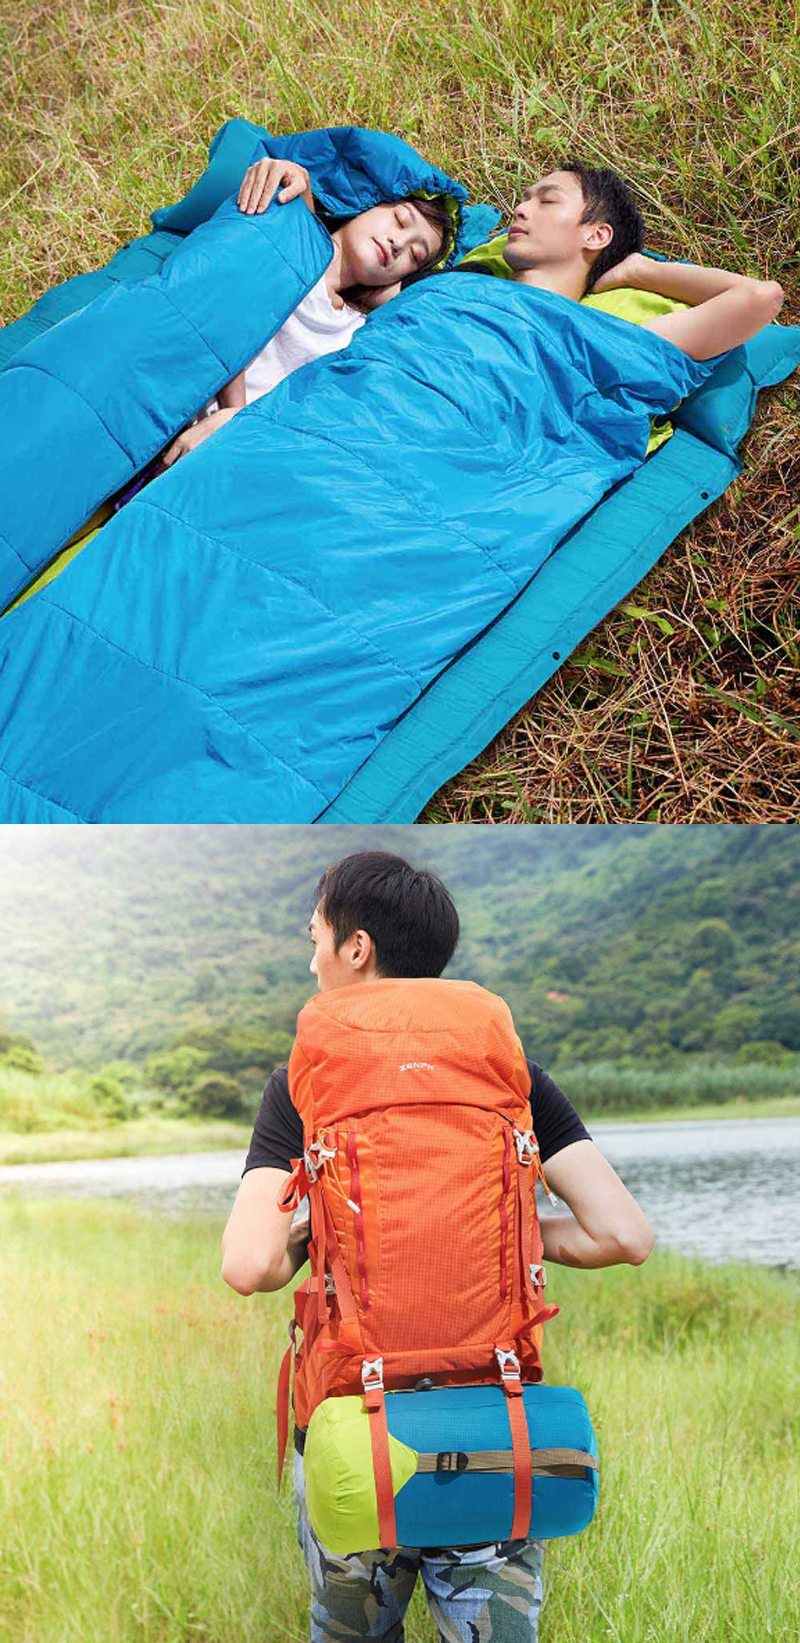 Zenph-HW050201-Portable-Sleeping-Bag-Seven-hole-Cotton-Single-Sleep-Pad-With-Cap-Outdoor-Camping-fro-1531948-3